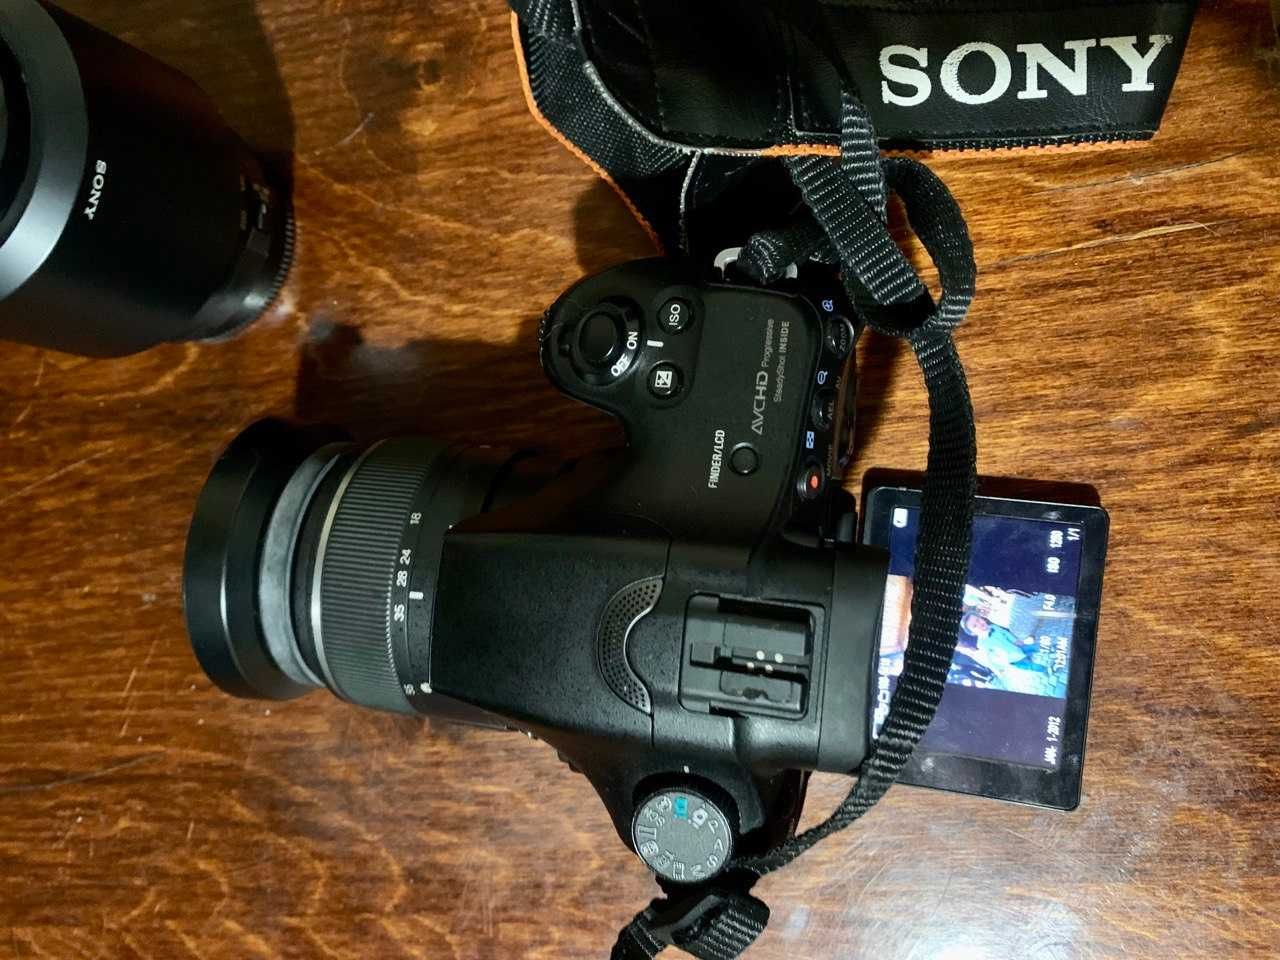 Sony Alpha SLT-A57